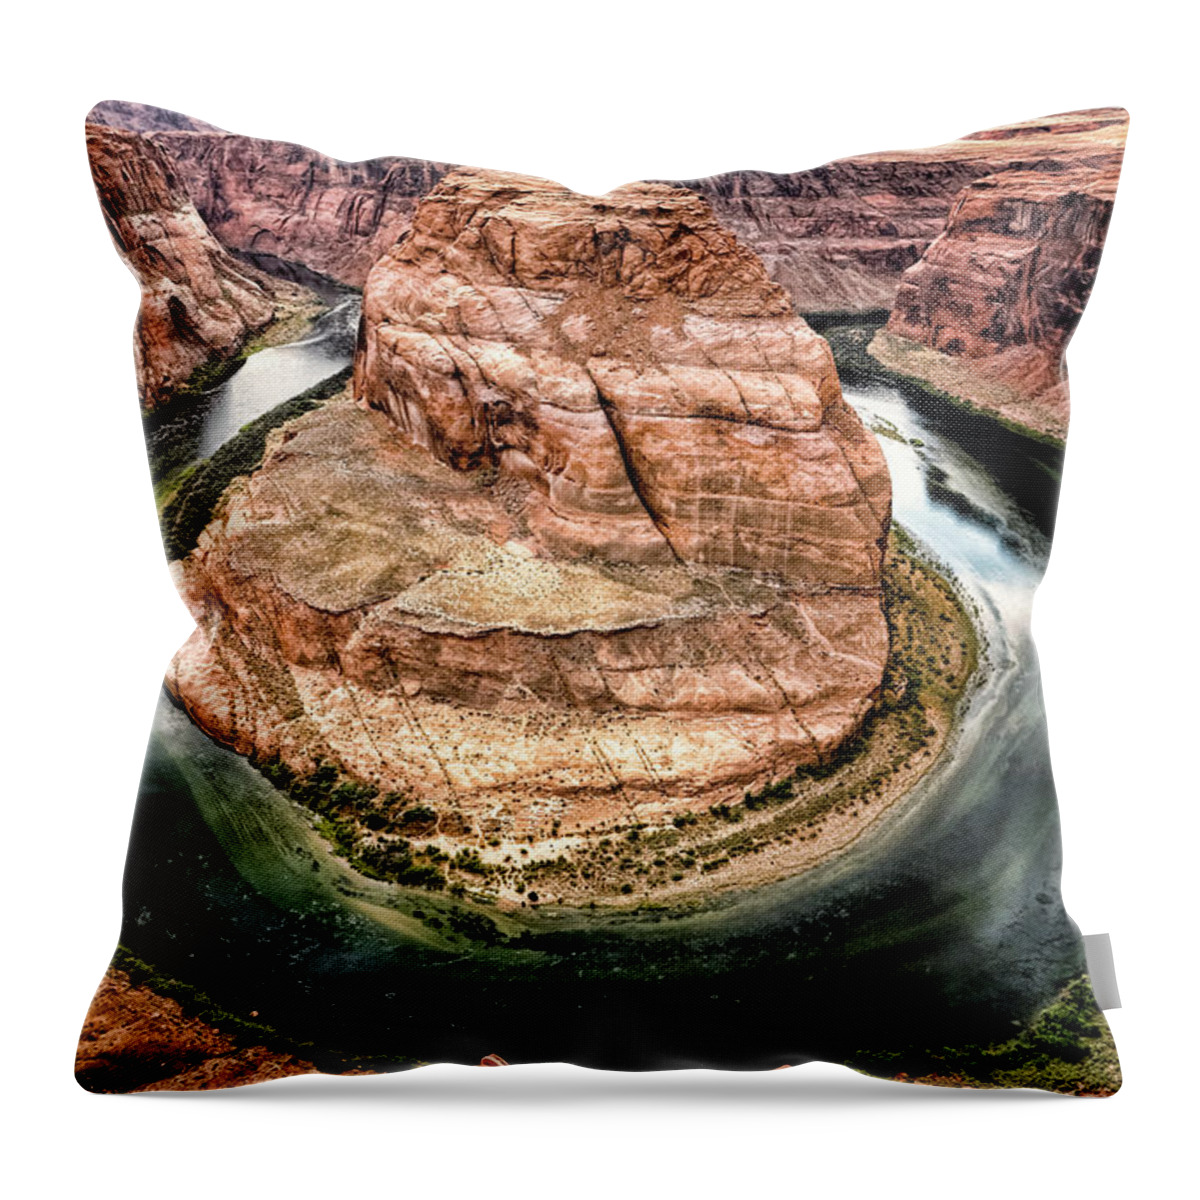 Horseshoe Bend Throw Pillow featuring the photograph Horseshoe Bend Colorado River by Gigi Ebert